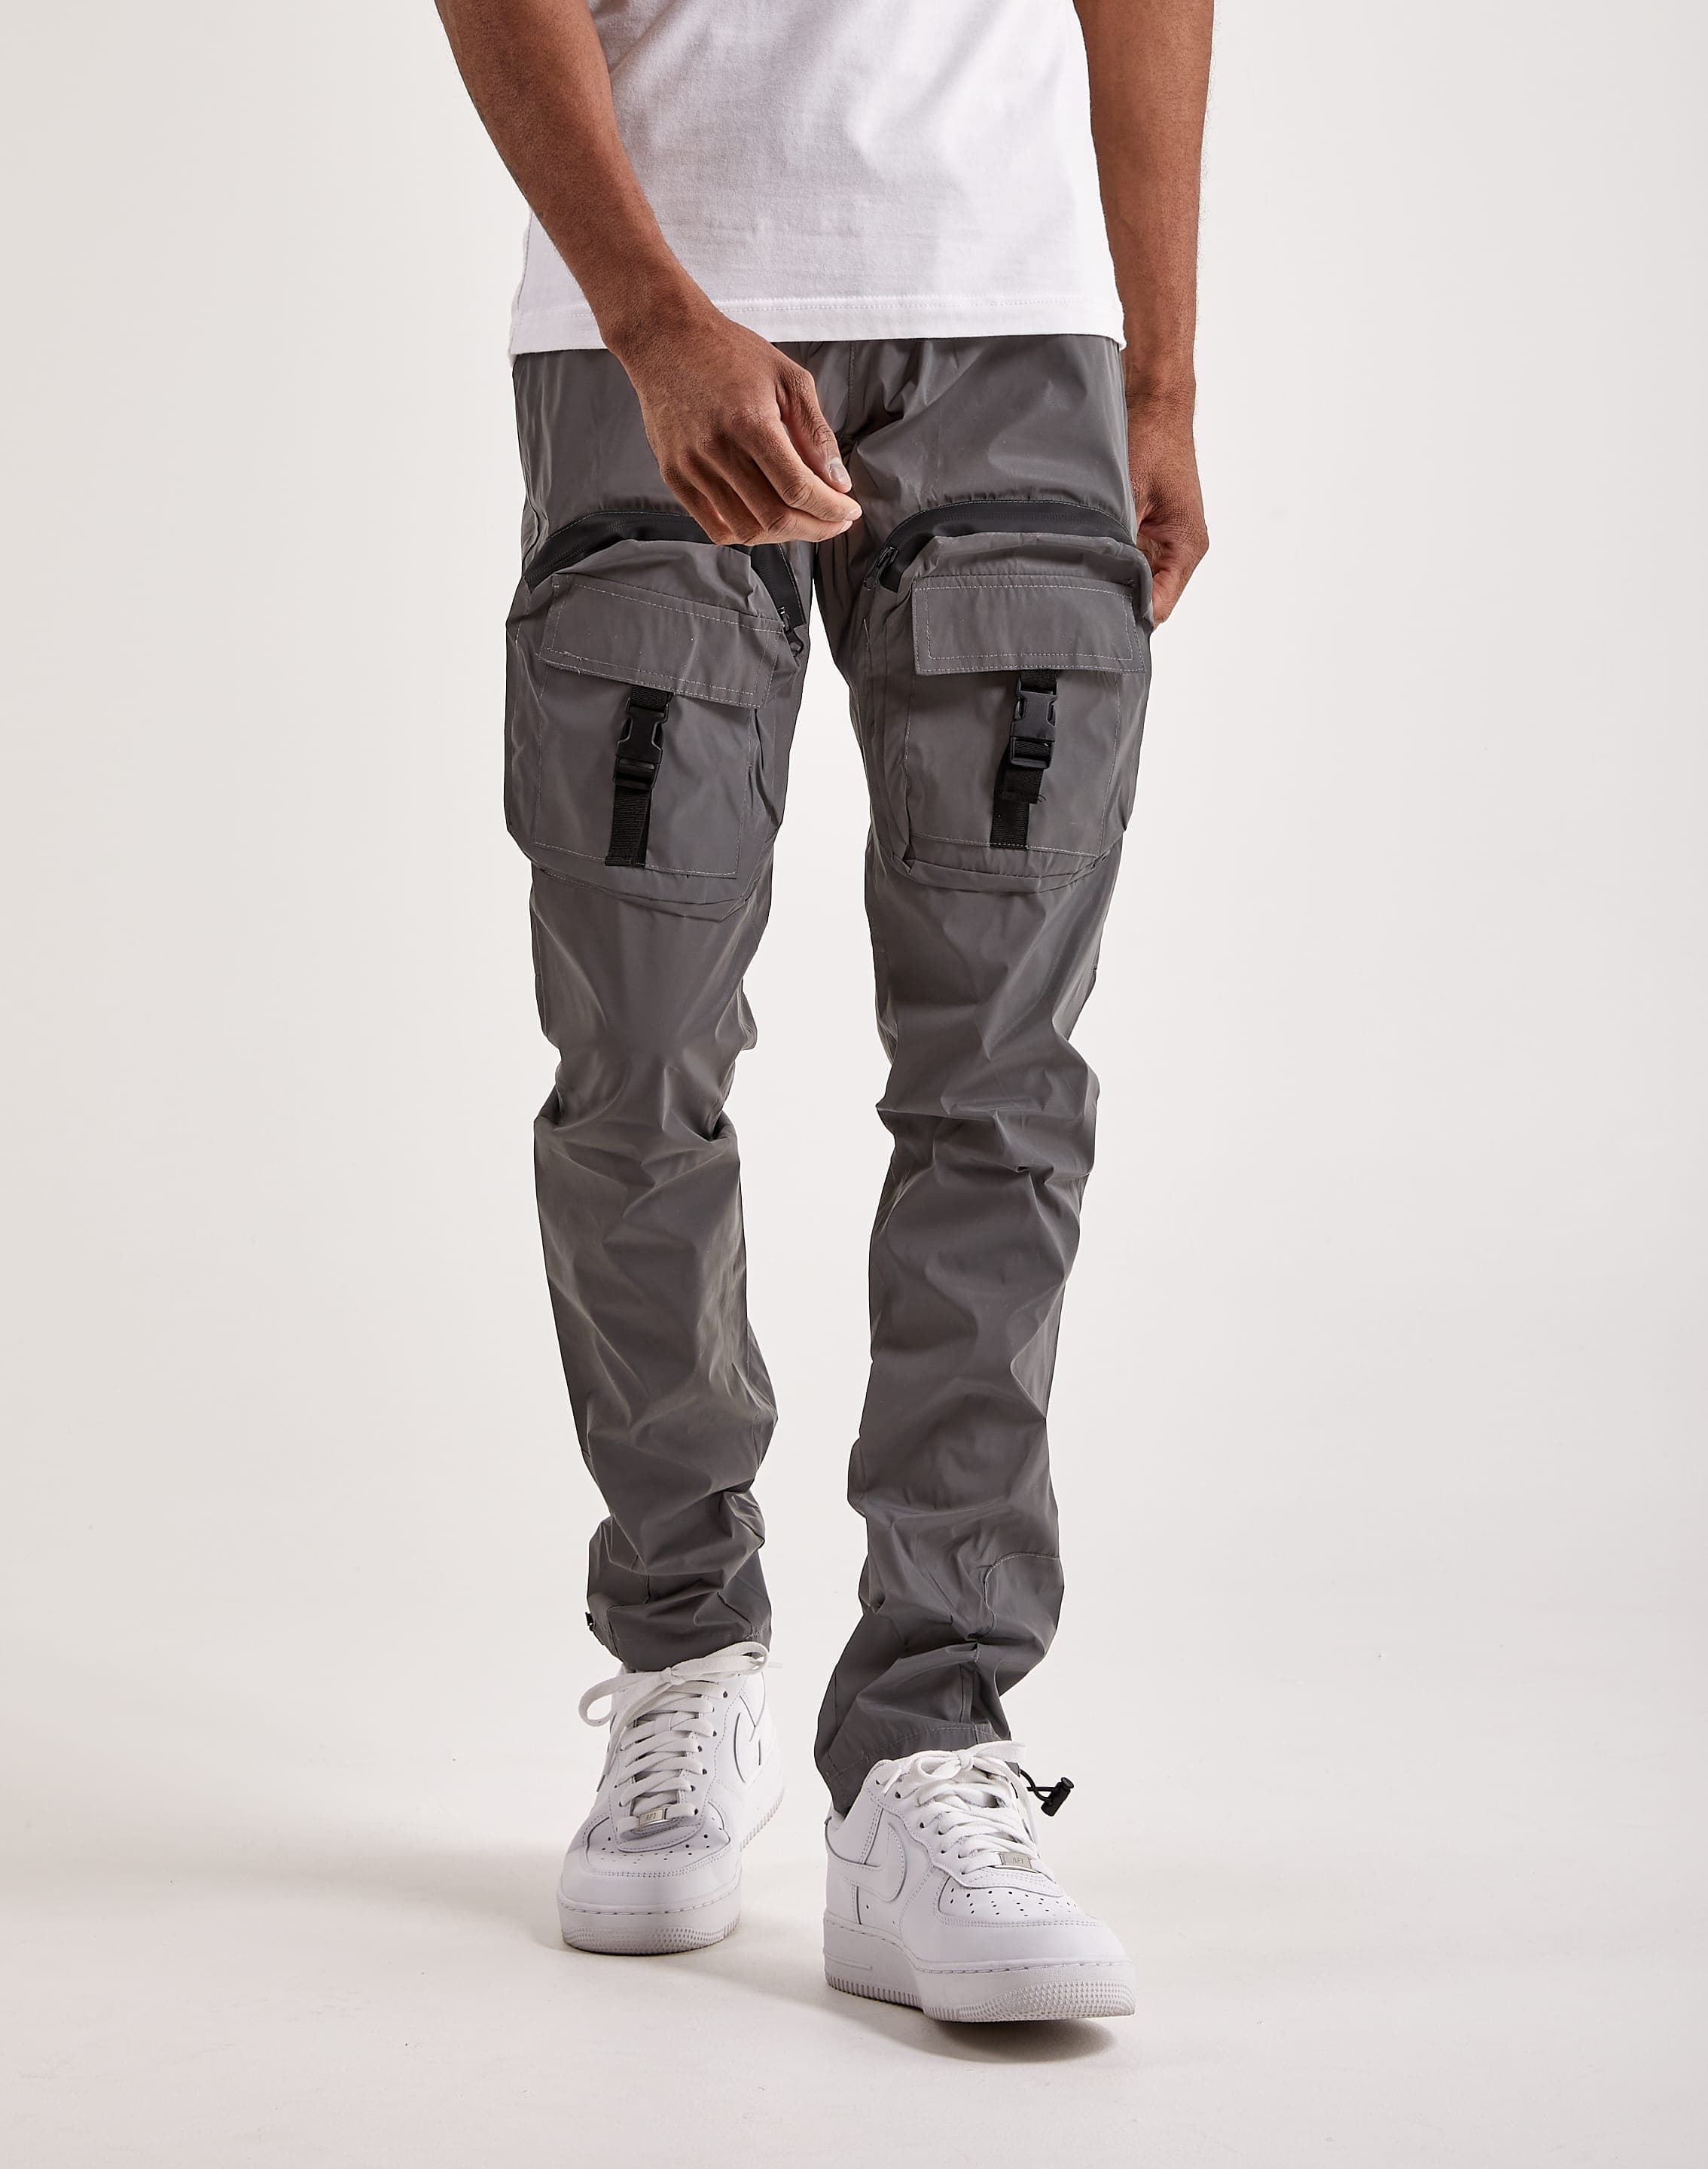 Taclite® Pro Ripstop Pants - Comfort & Durability